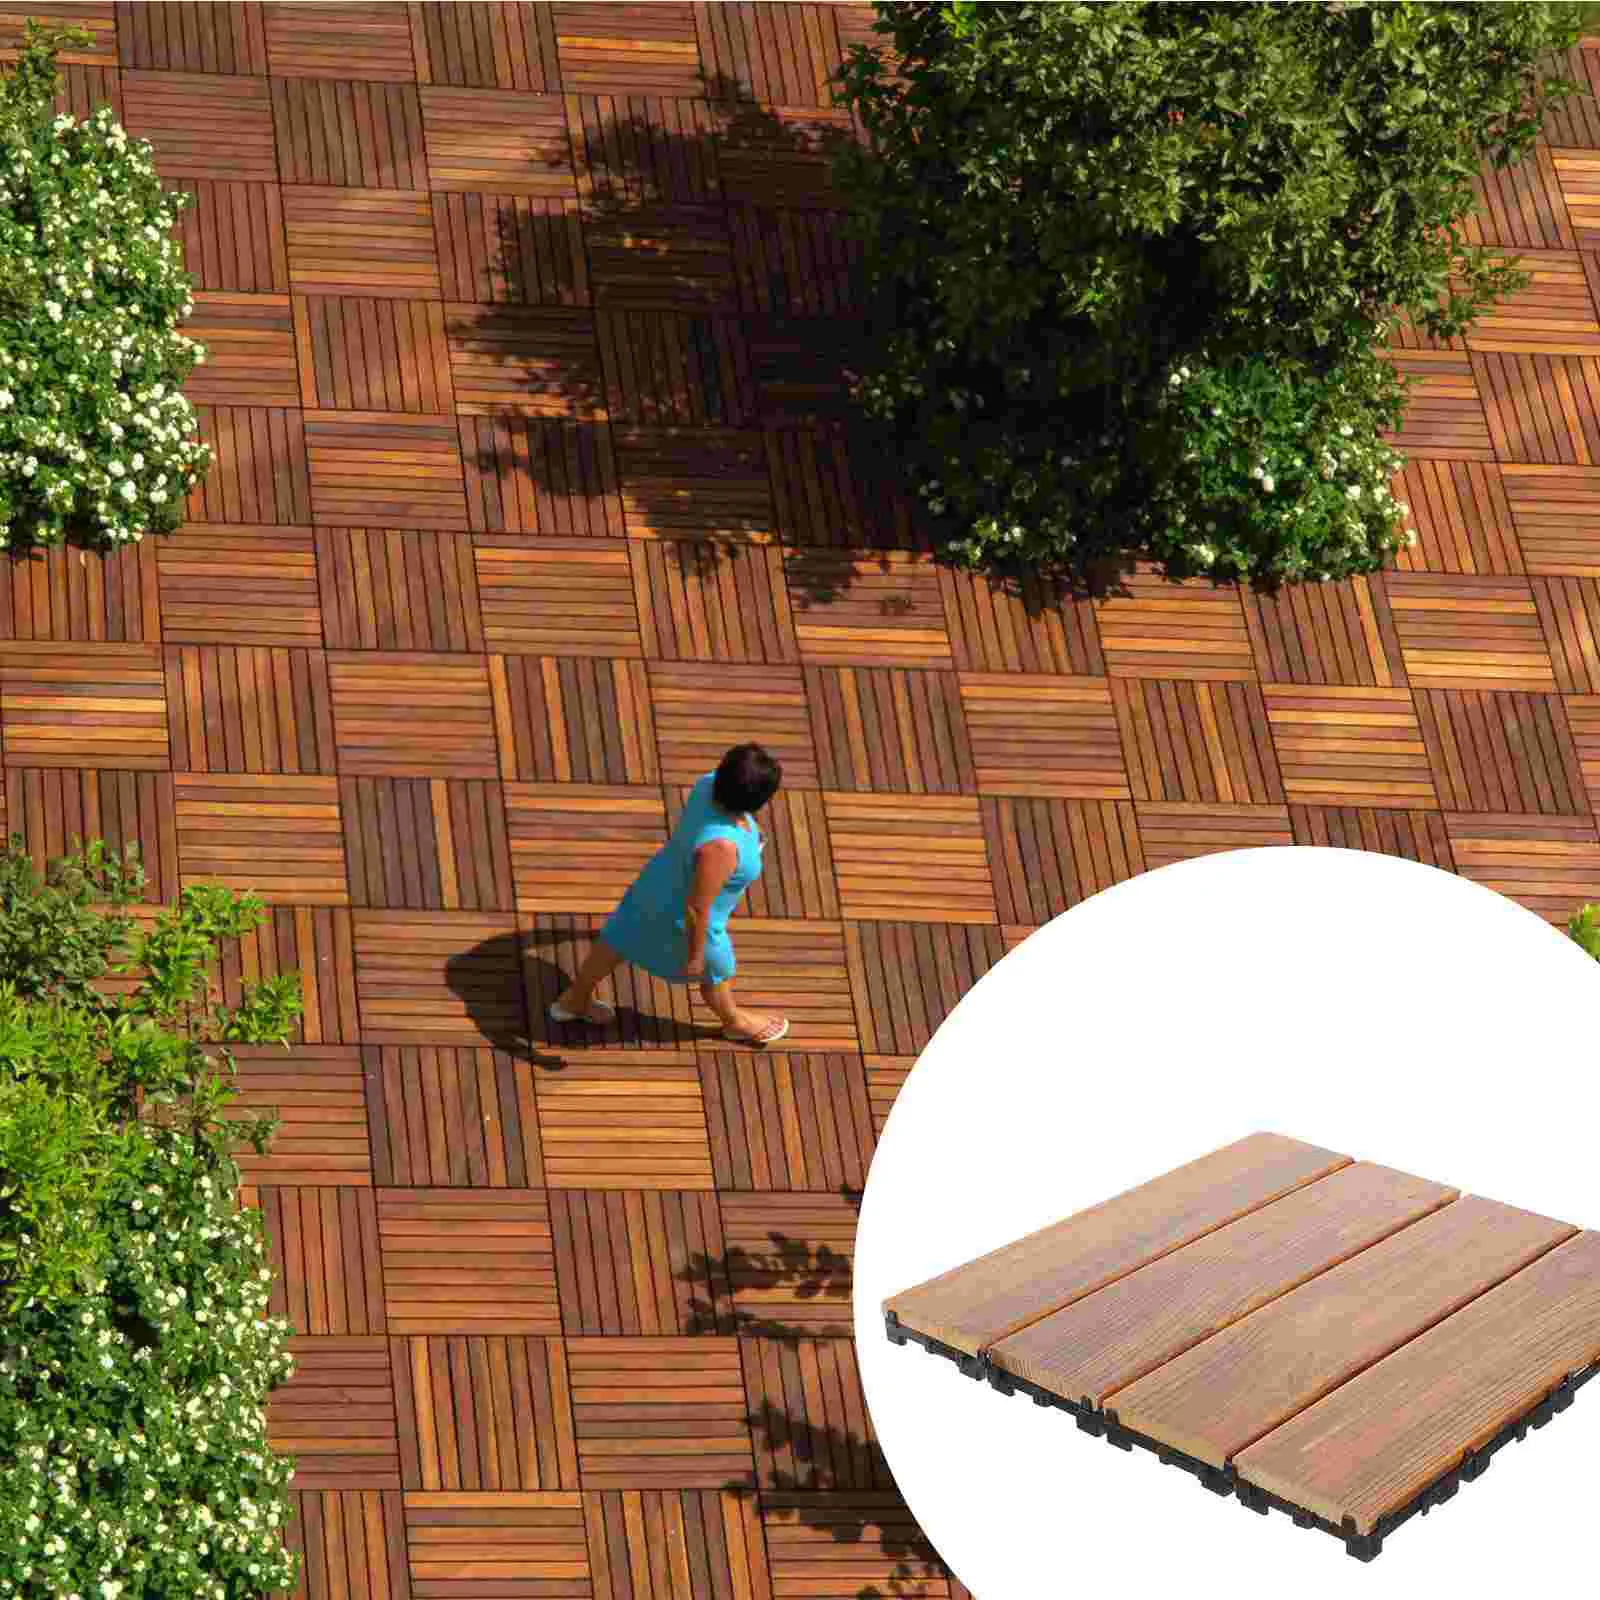 

Balcony Deck Tile Patio Home Decor Self-assemble Interlocking Floor Decking Tiles Wooden Carbonized Outdoor